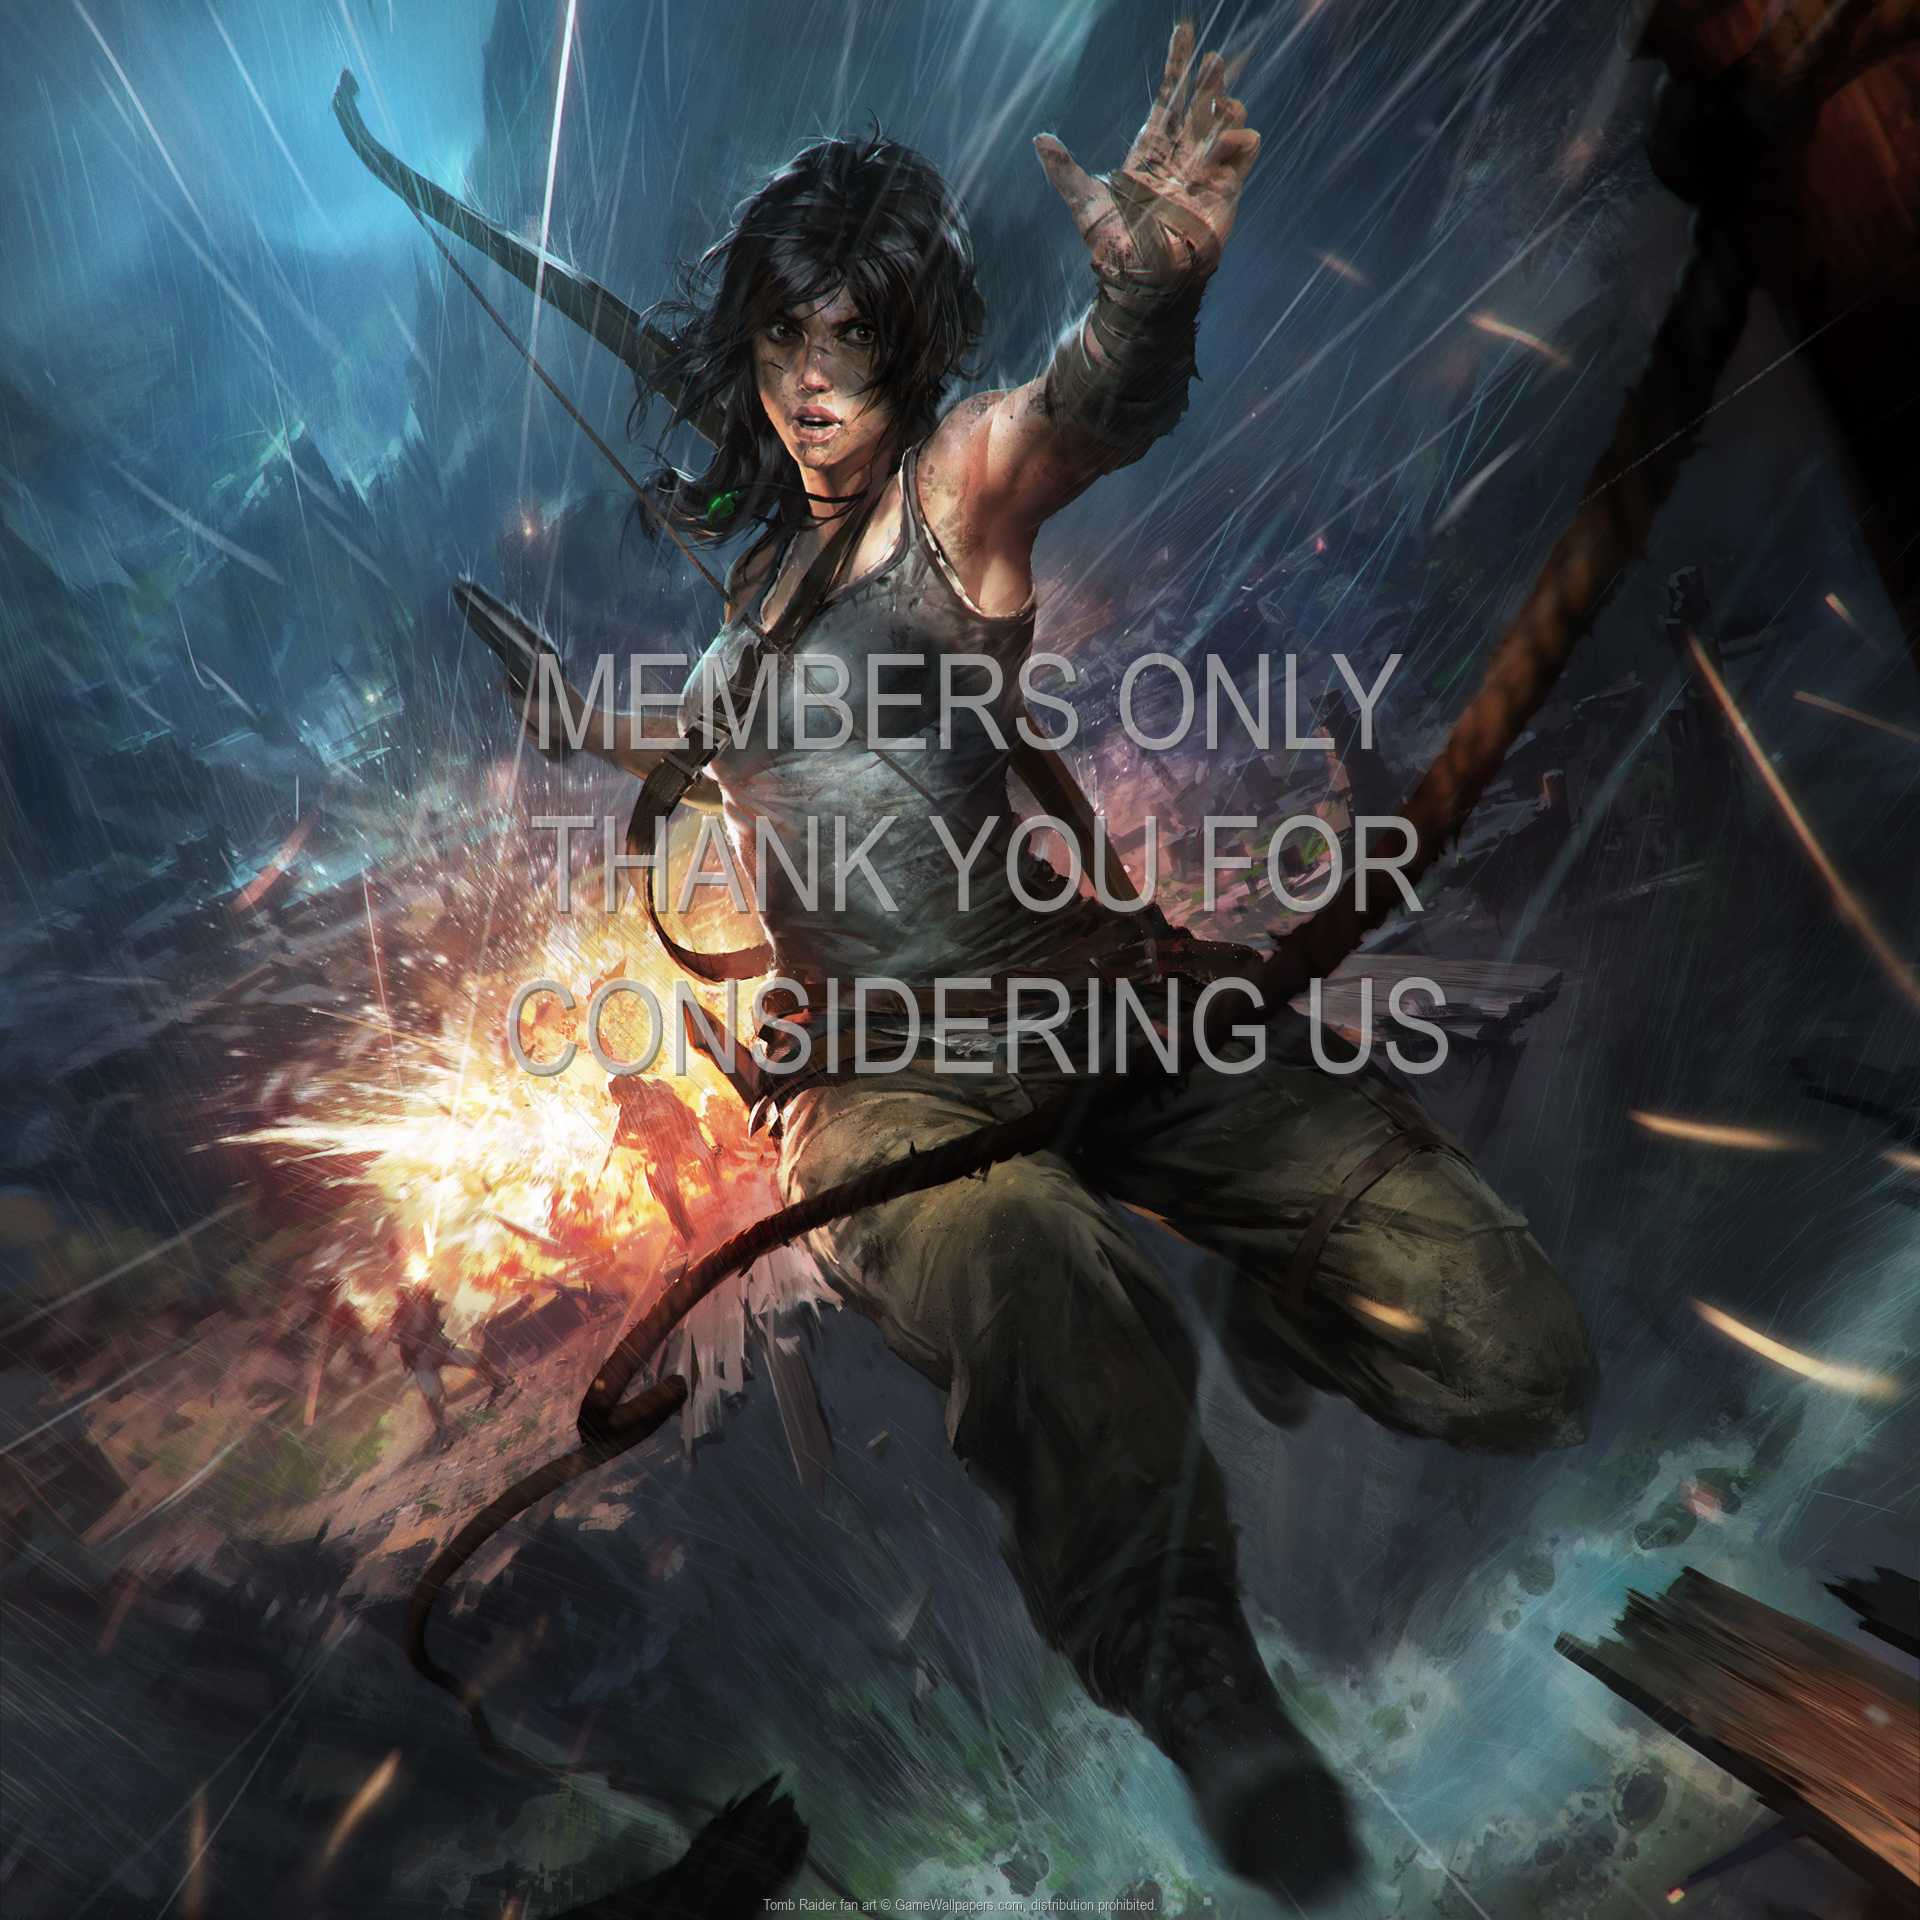 Tomb Raider fan art 1080p Horizontal Mobile wallpaper or background 04